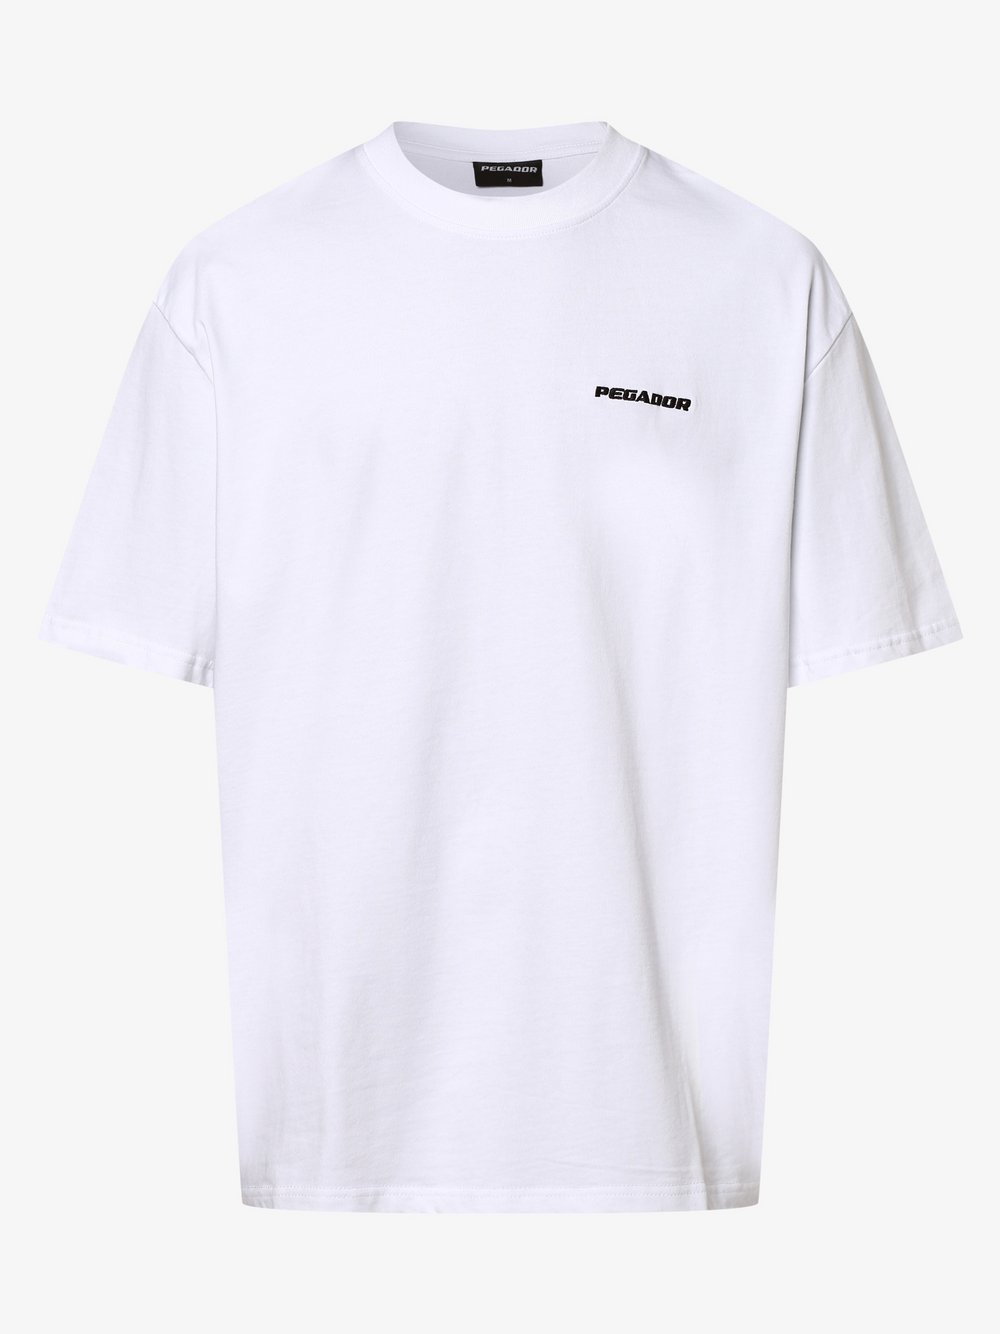 PEGADOR - T-shirt męski, biały